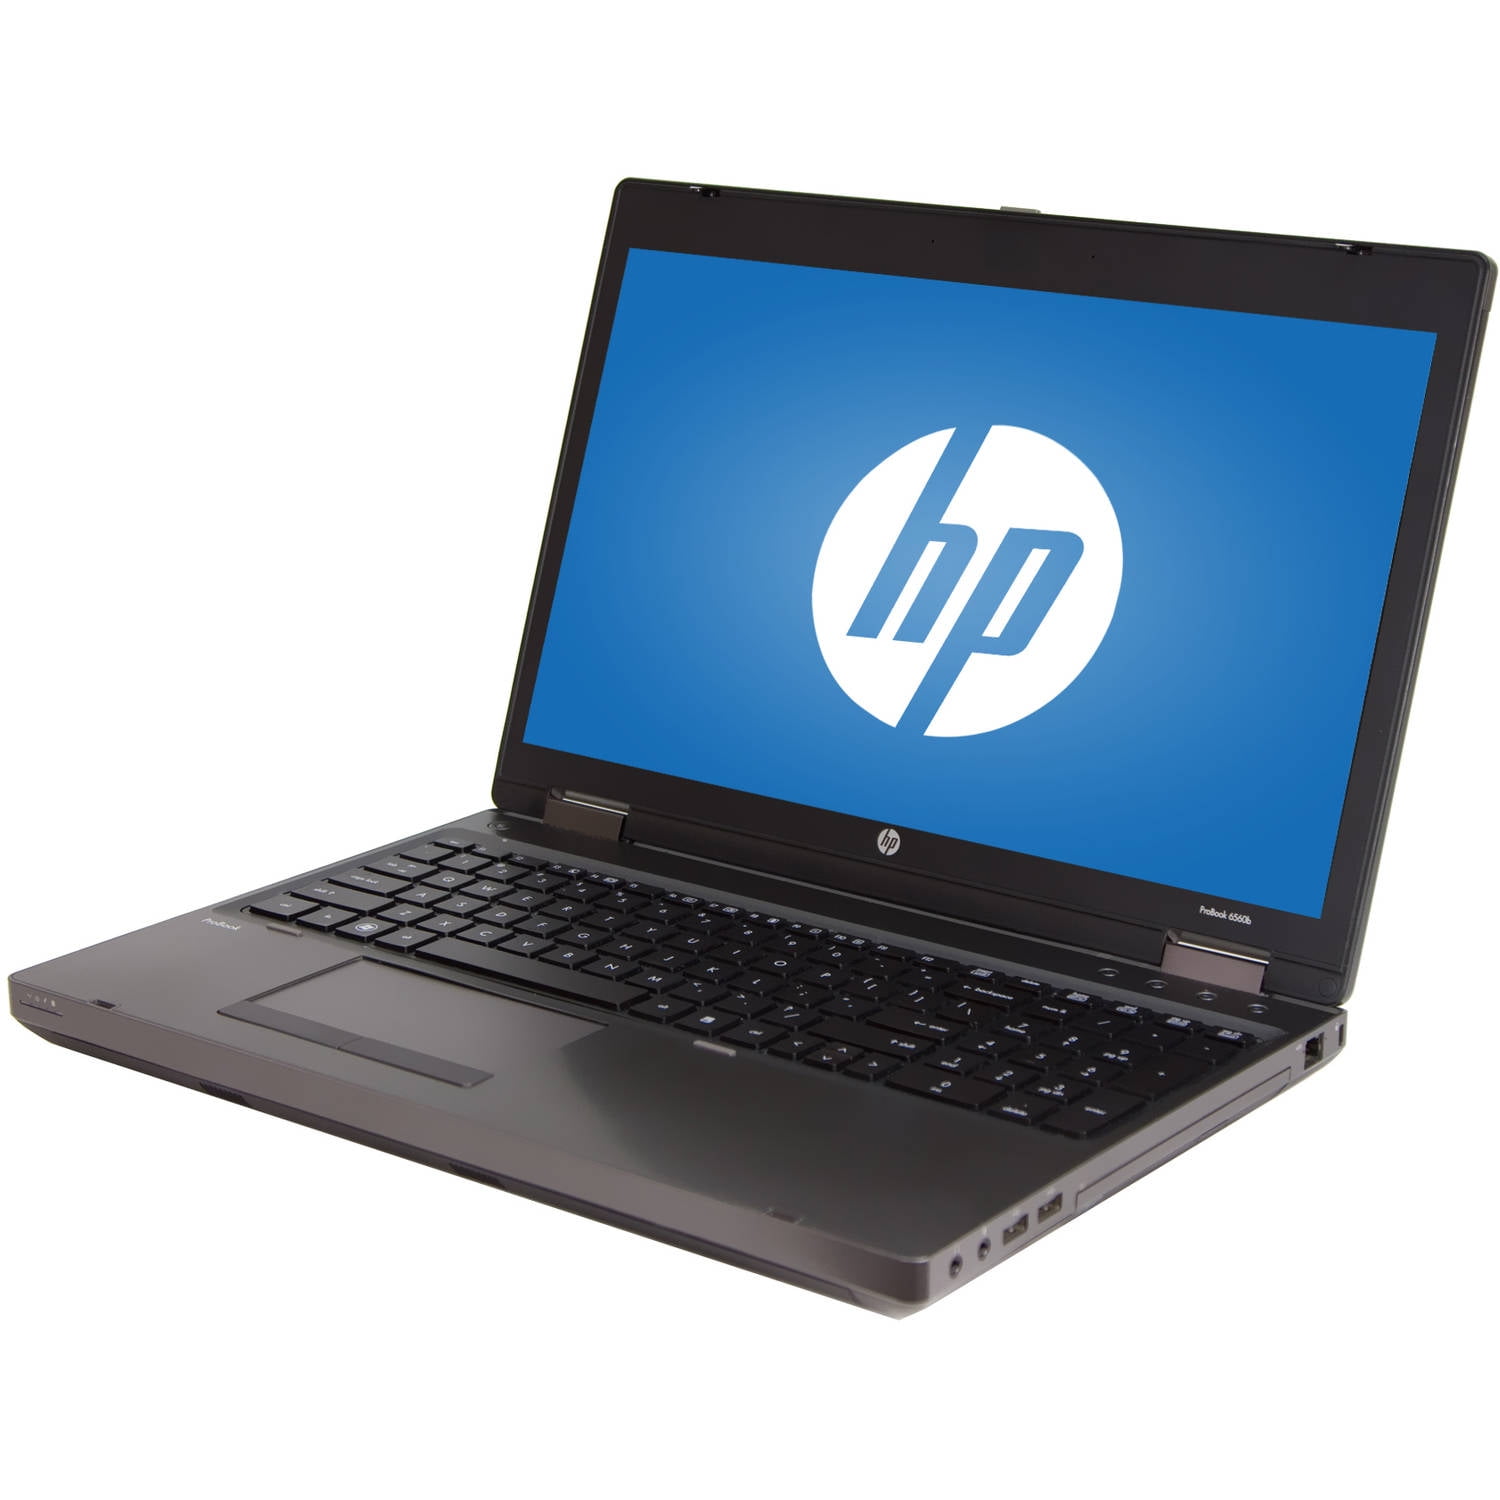 Renewed HP ProBook 6560b Laptop 15.6 inches,Intel i5,8GB RAM,320GB HDD,Win10 Home 